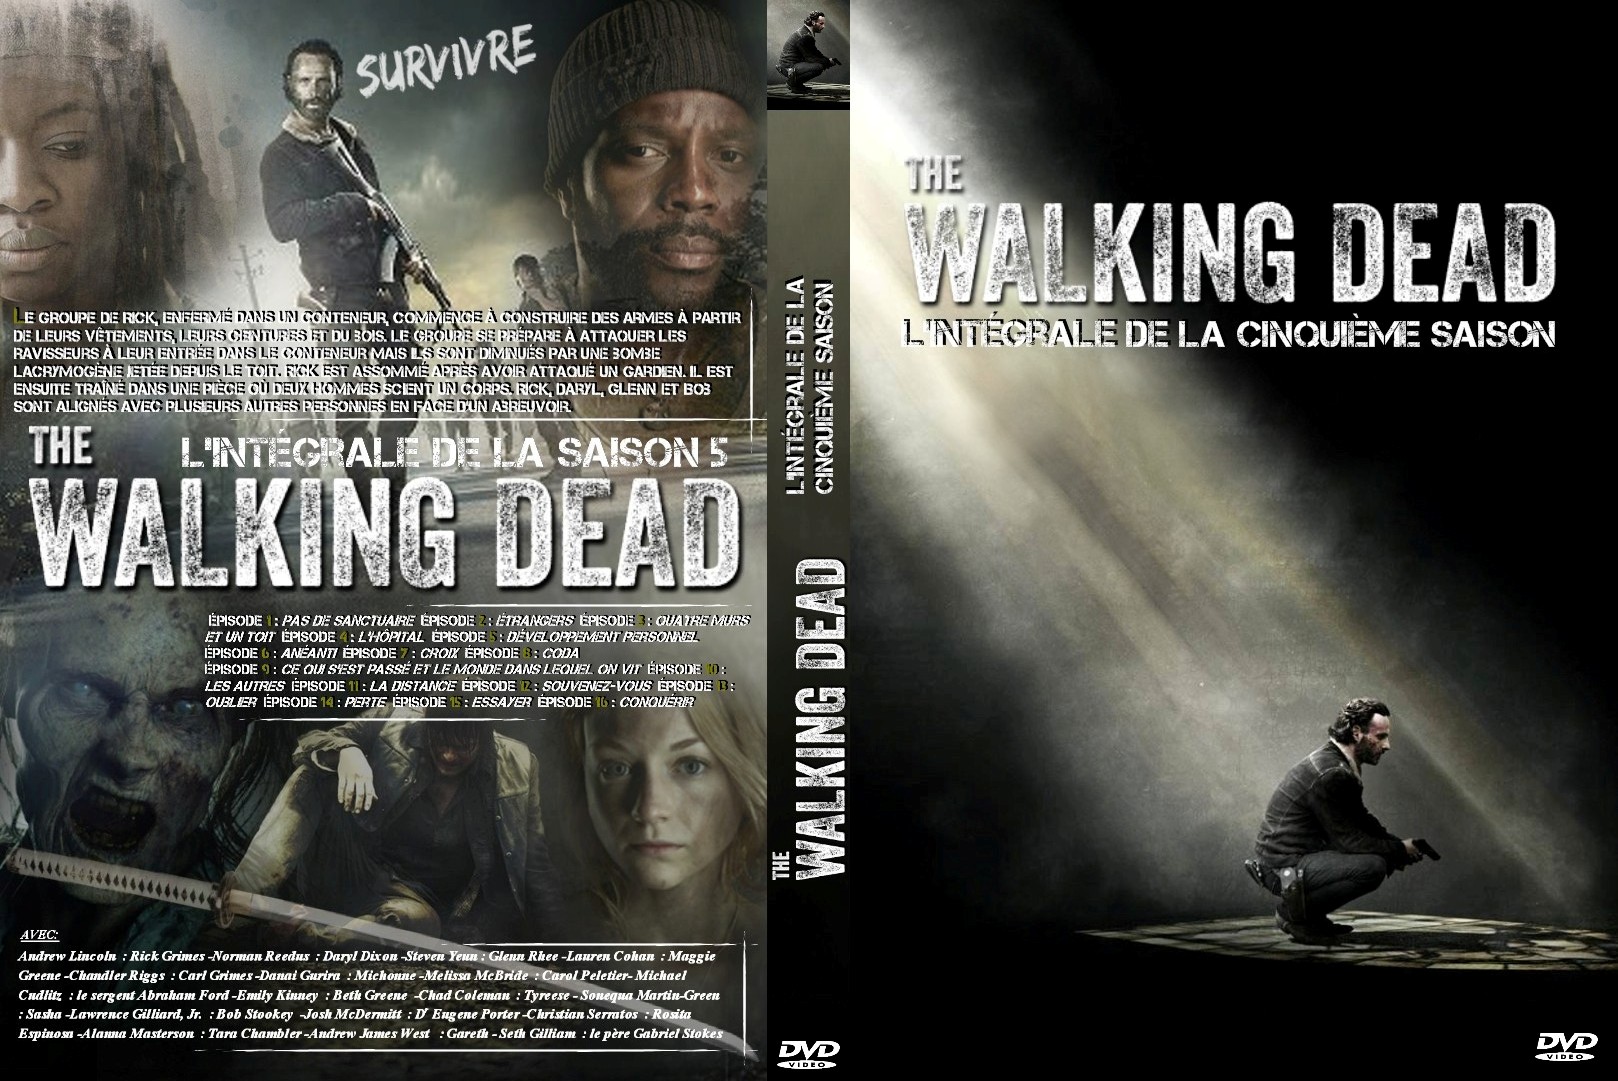 Jaquette DVD The Walking dead Saison 5 custom